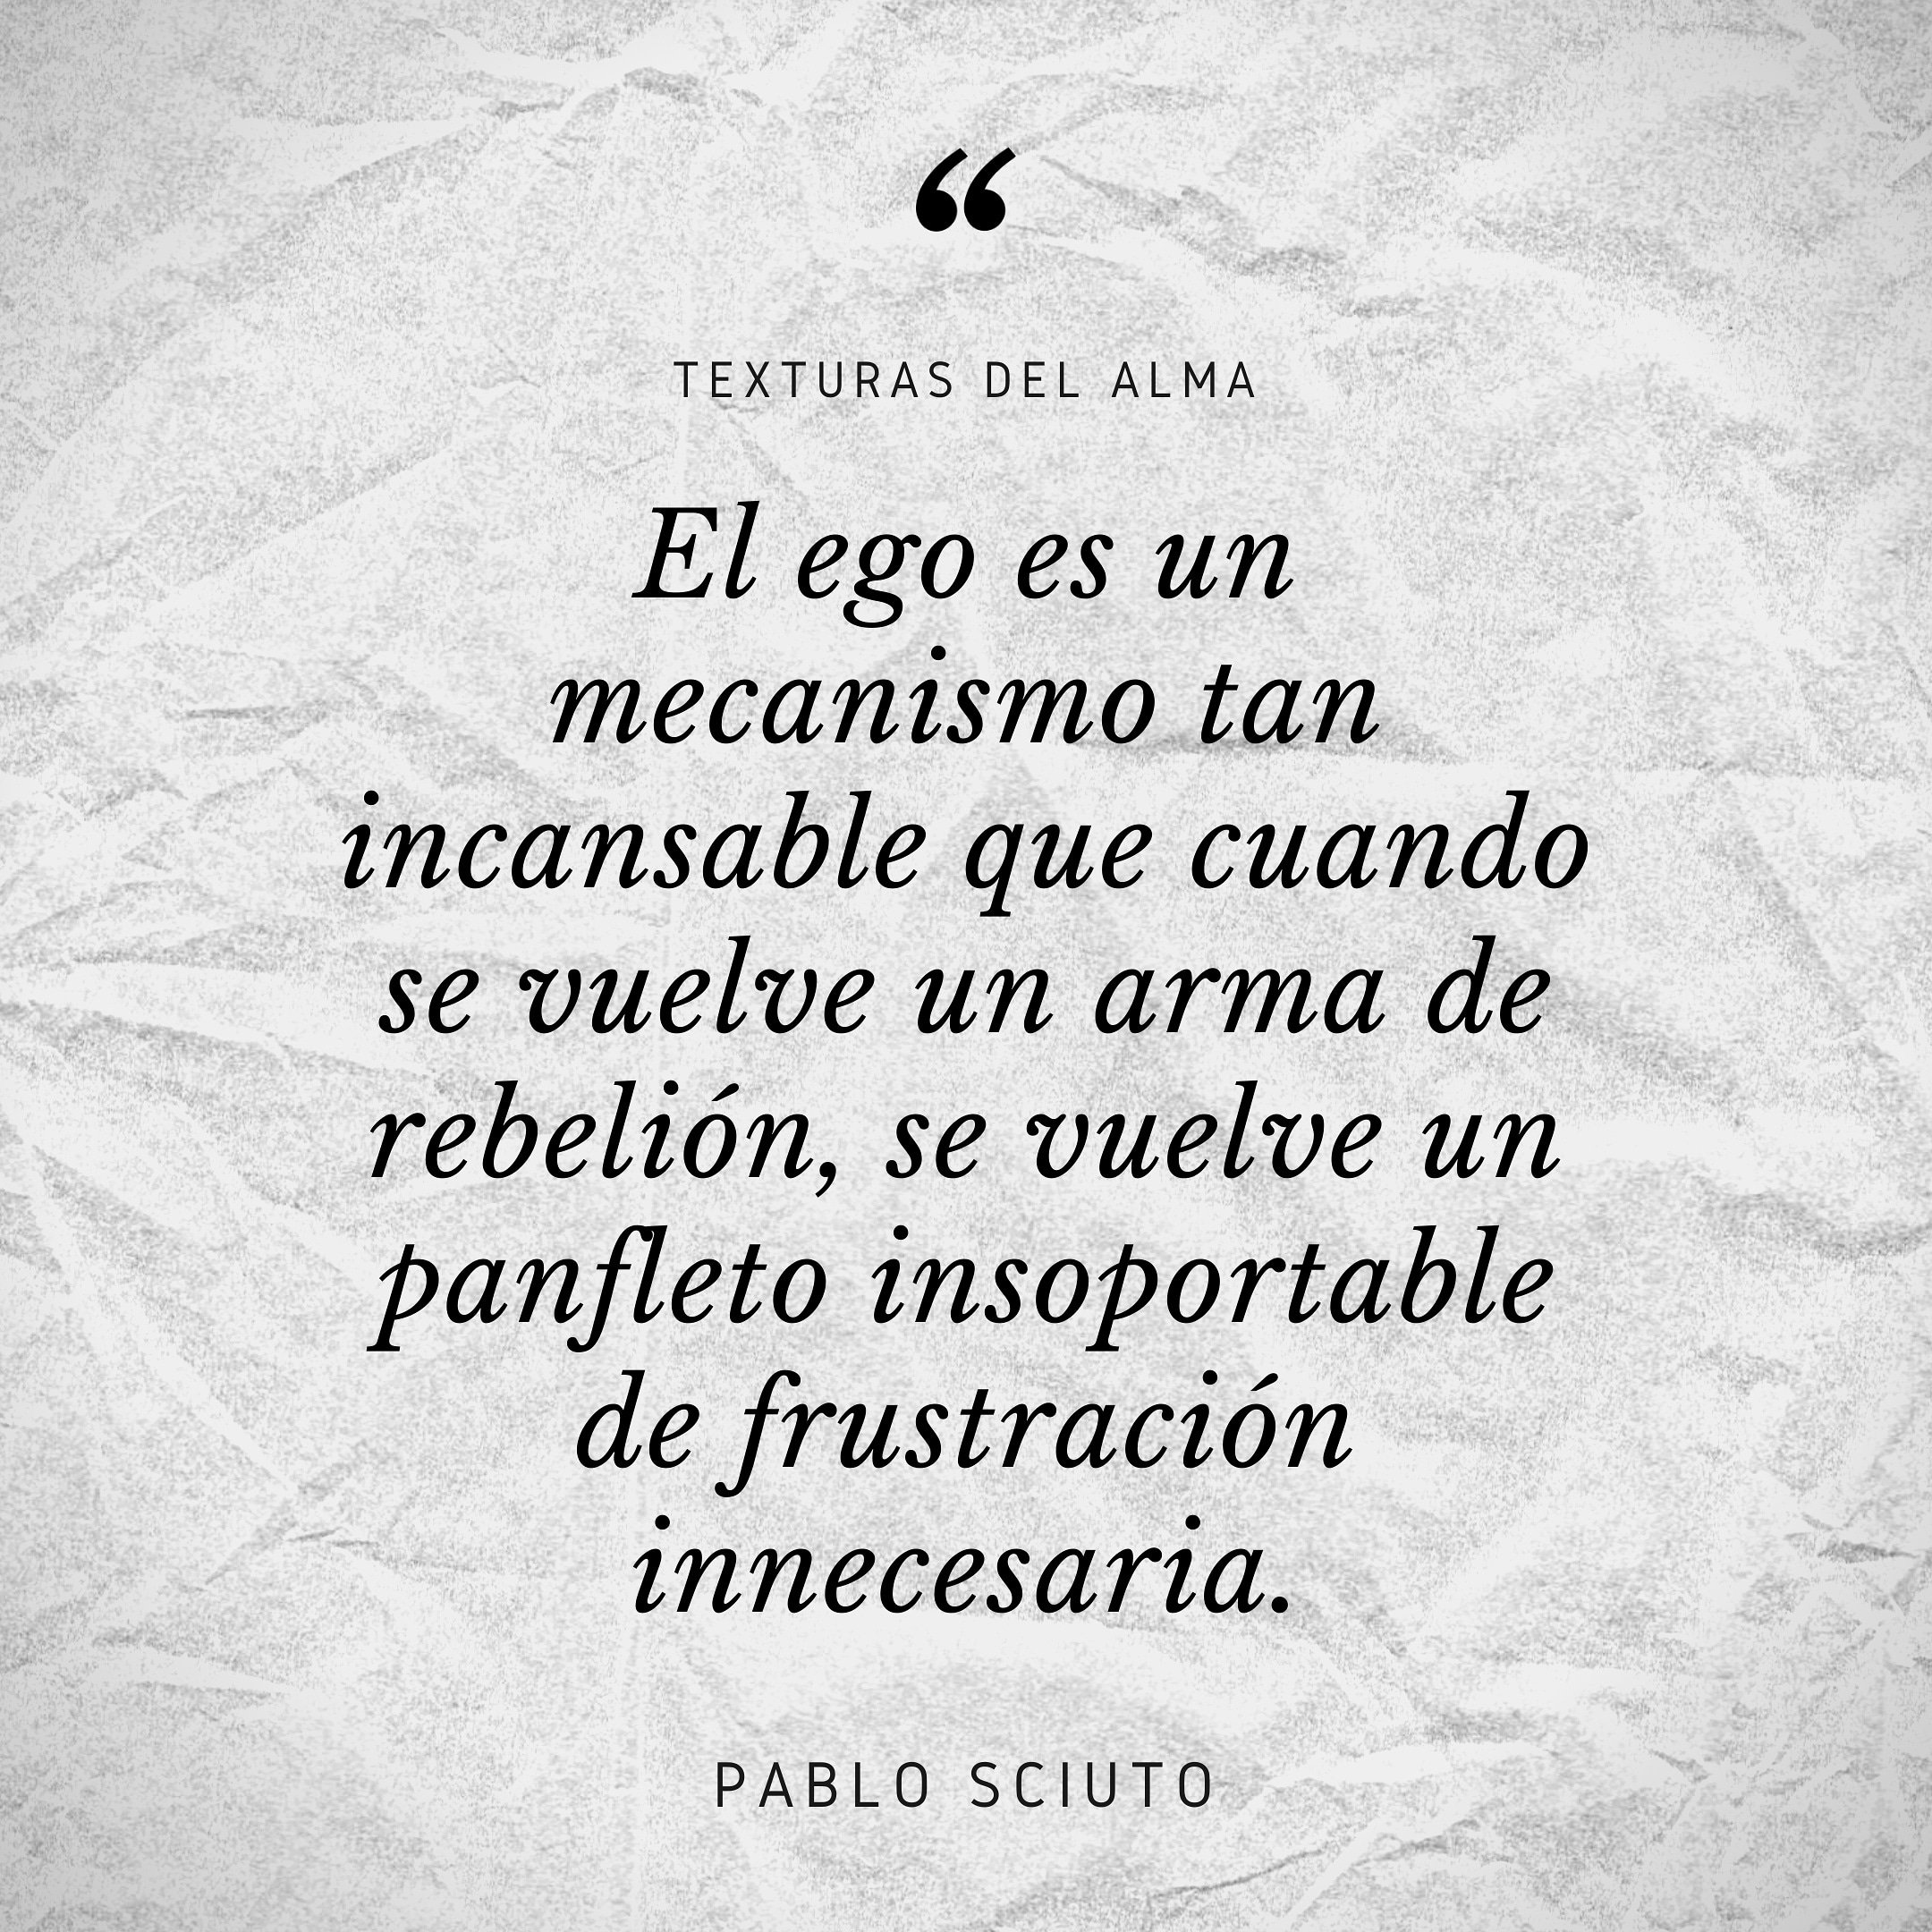 Pablo Sciuto Poemas y Frases on Twitter: 